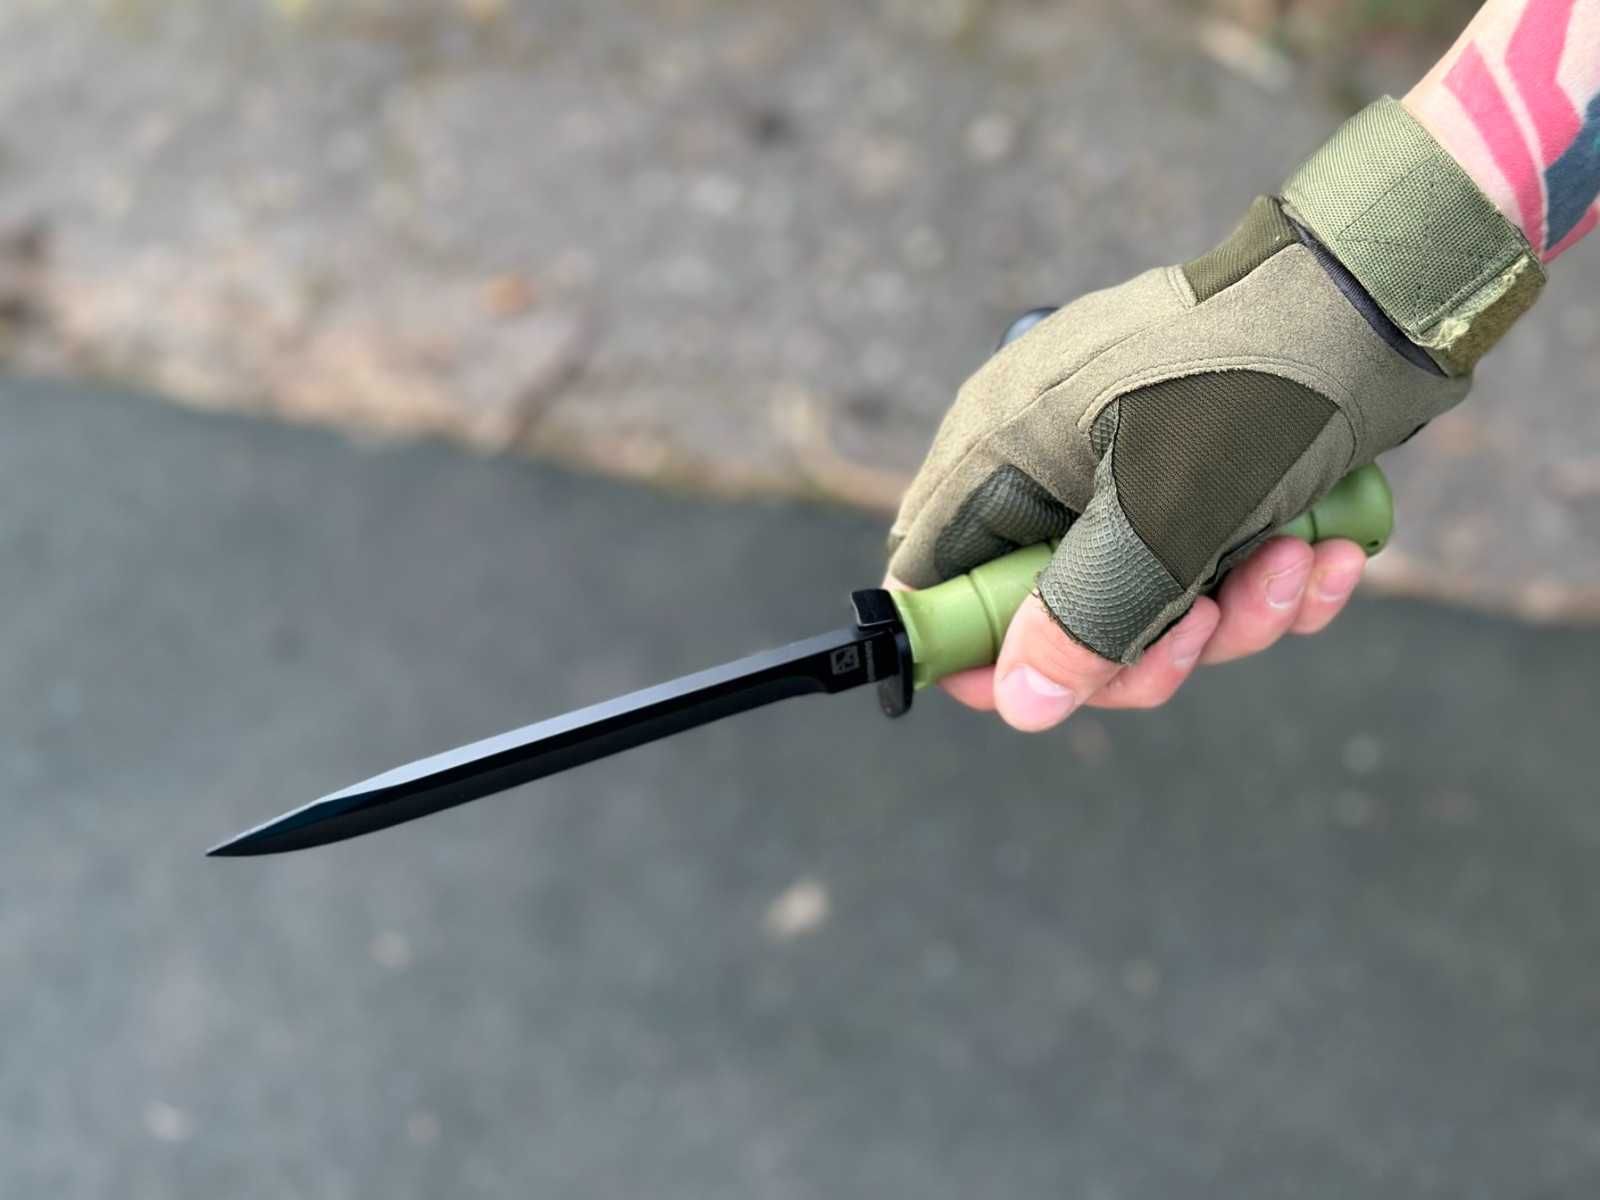 Штурмовой нож MFH Glock FM 78 олива,тактический нож,нож для выживания